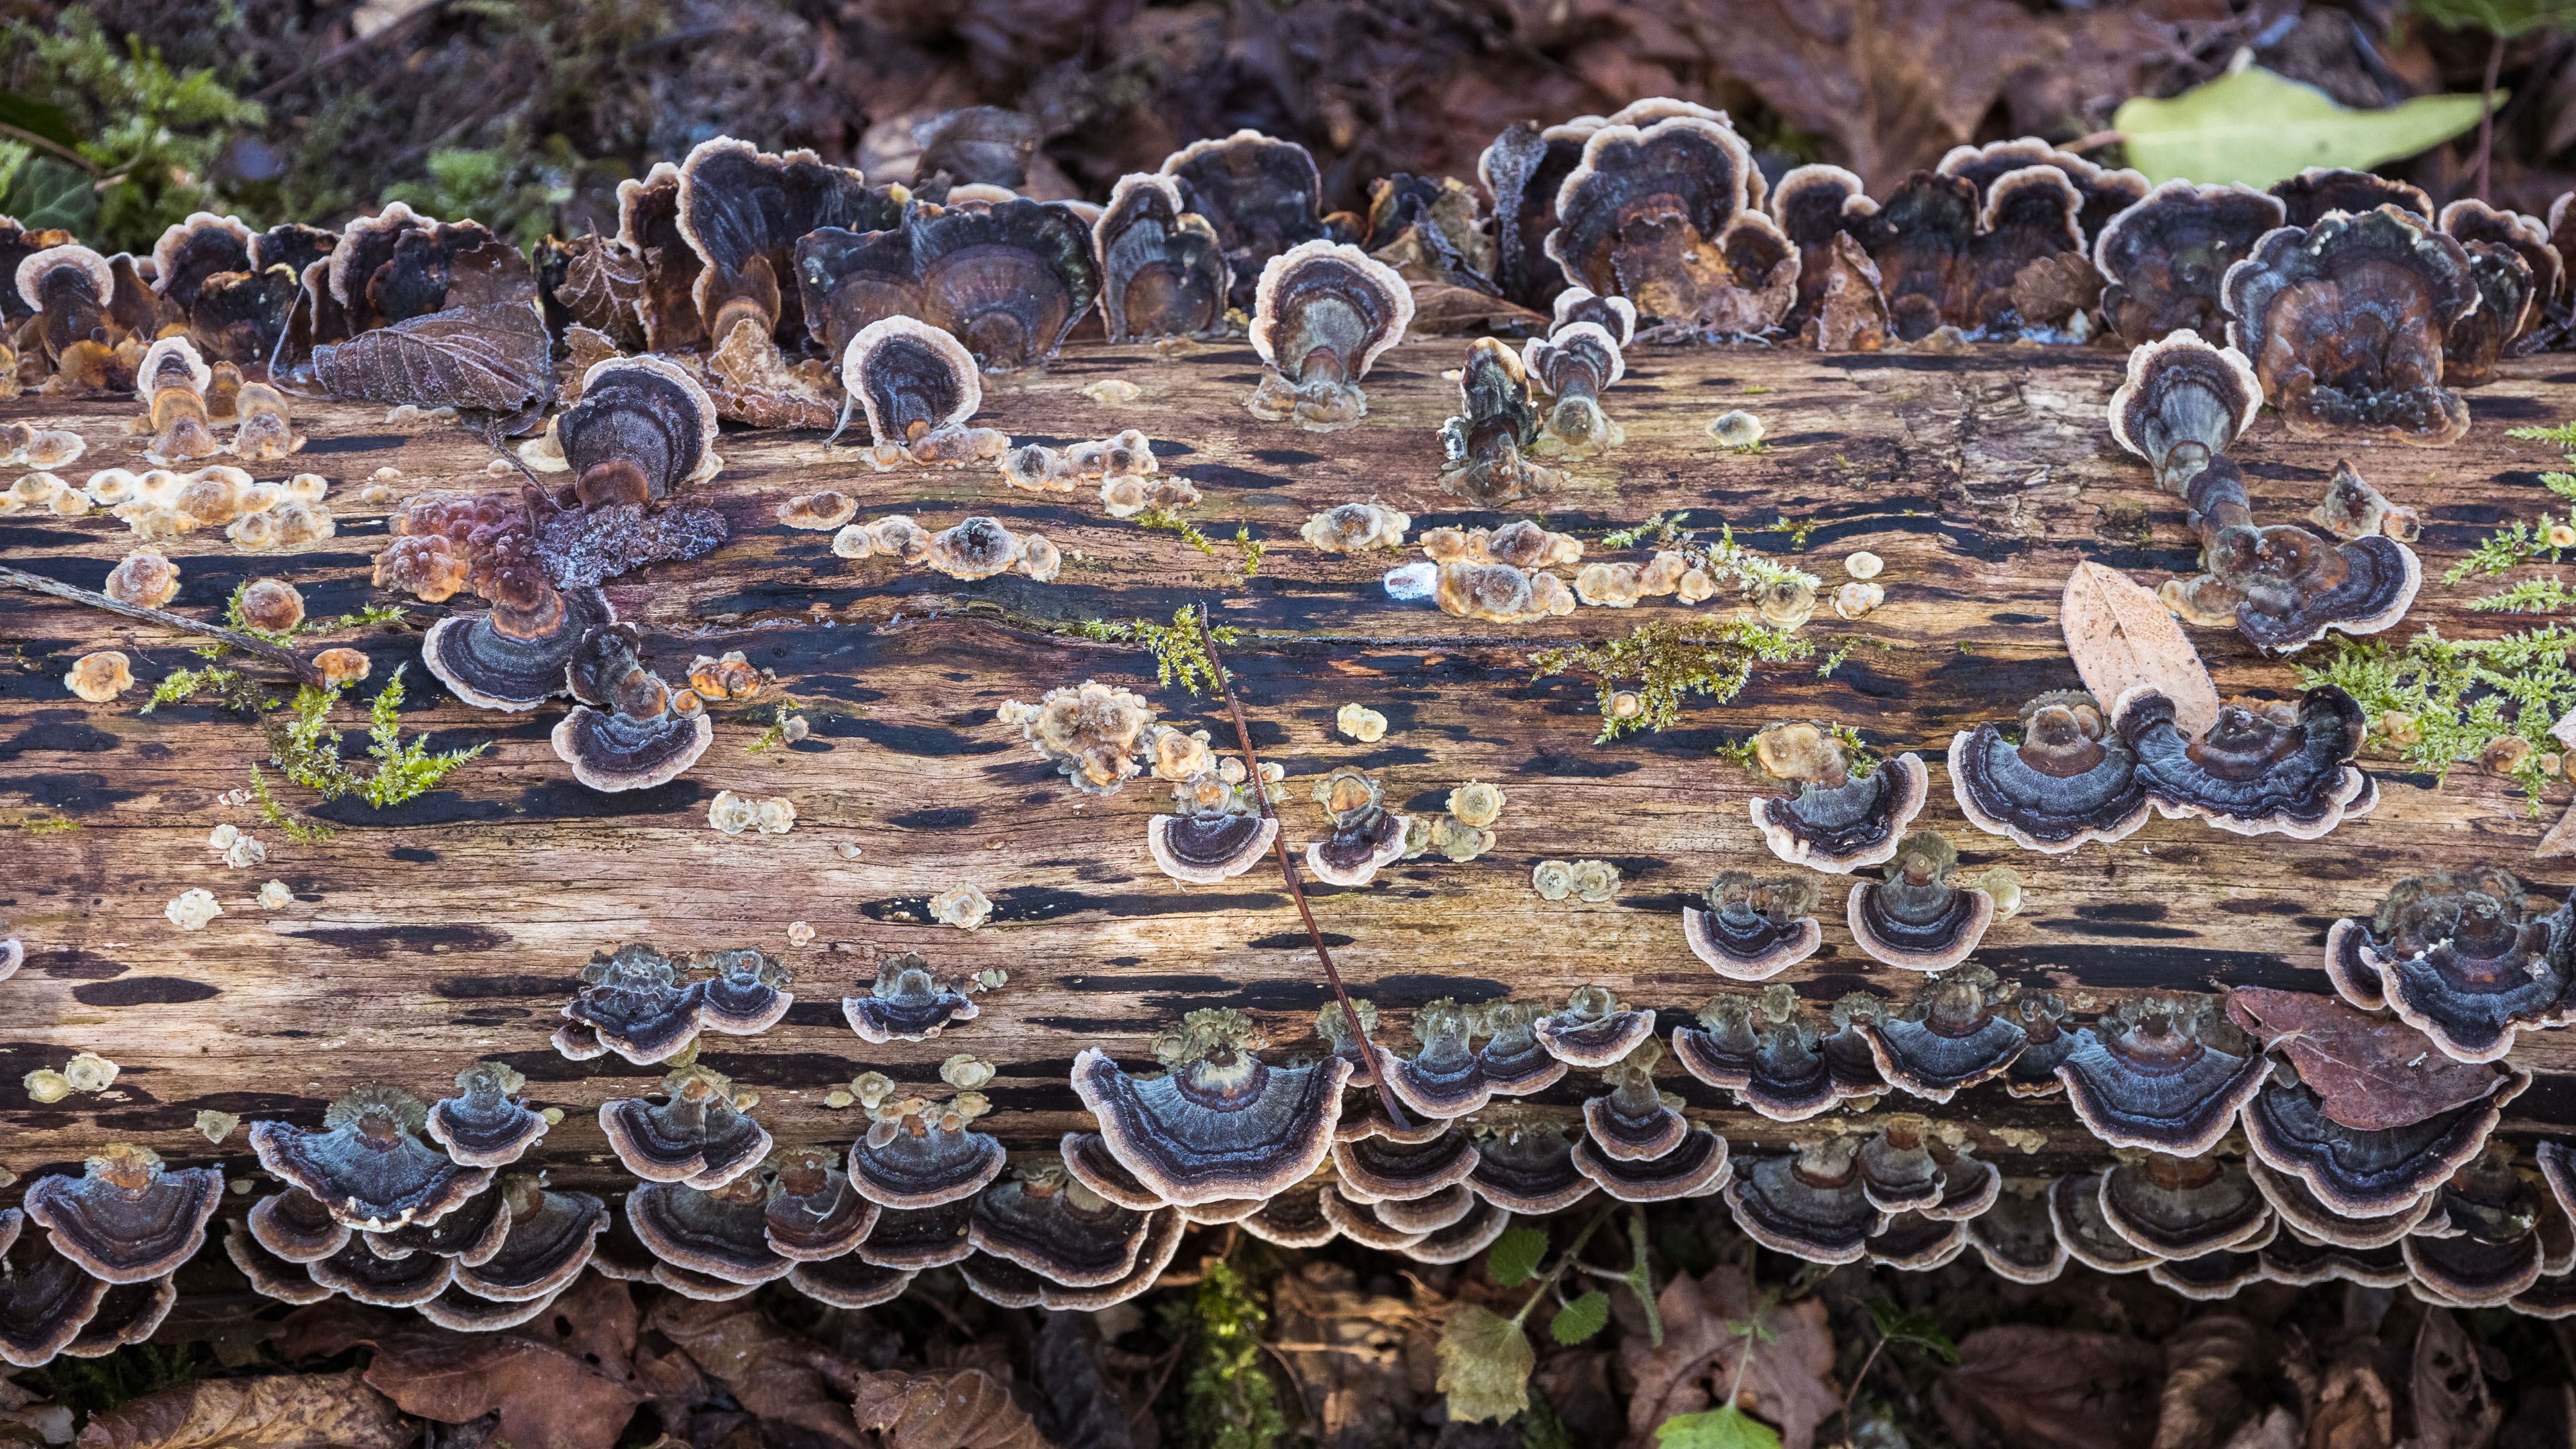 General 3840x2160 nature mushroom forest lichen top view